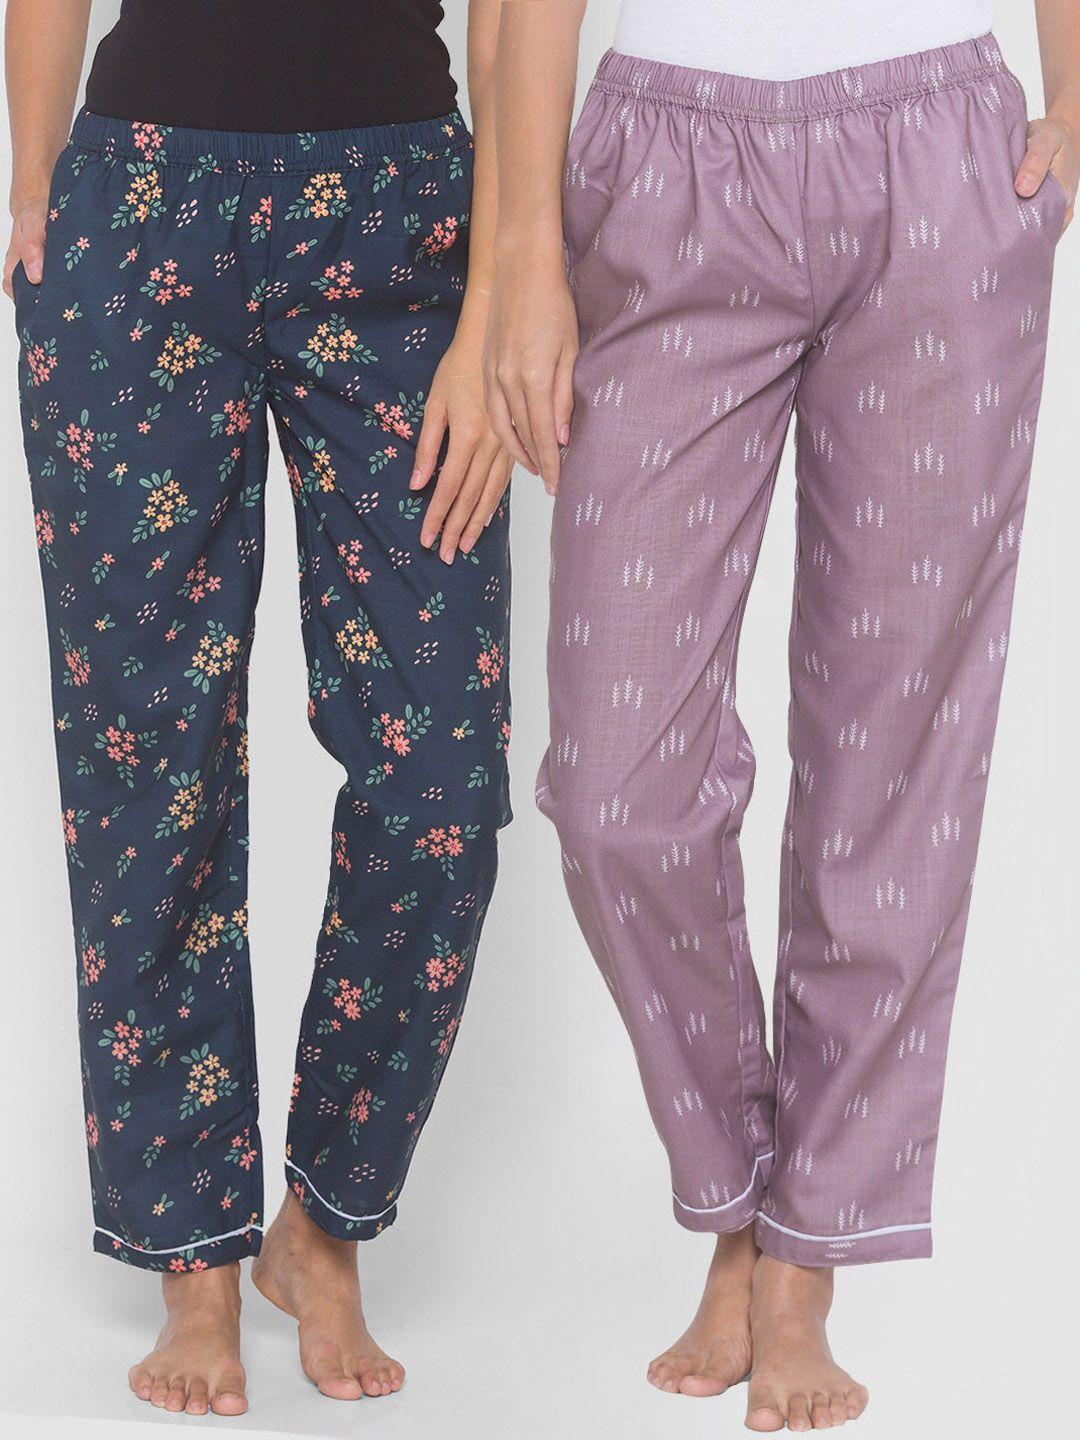 fashionrack women set of 2 printed cotton lounge pants